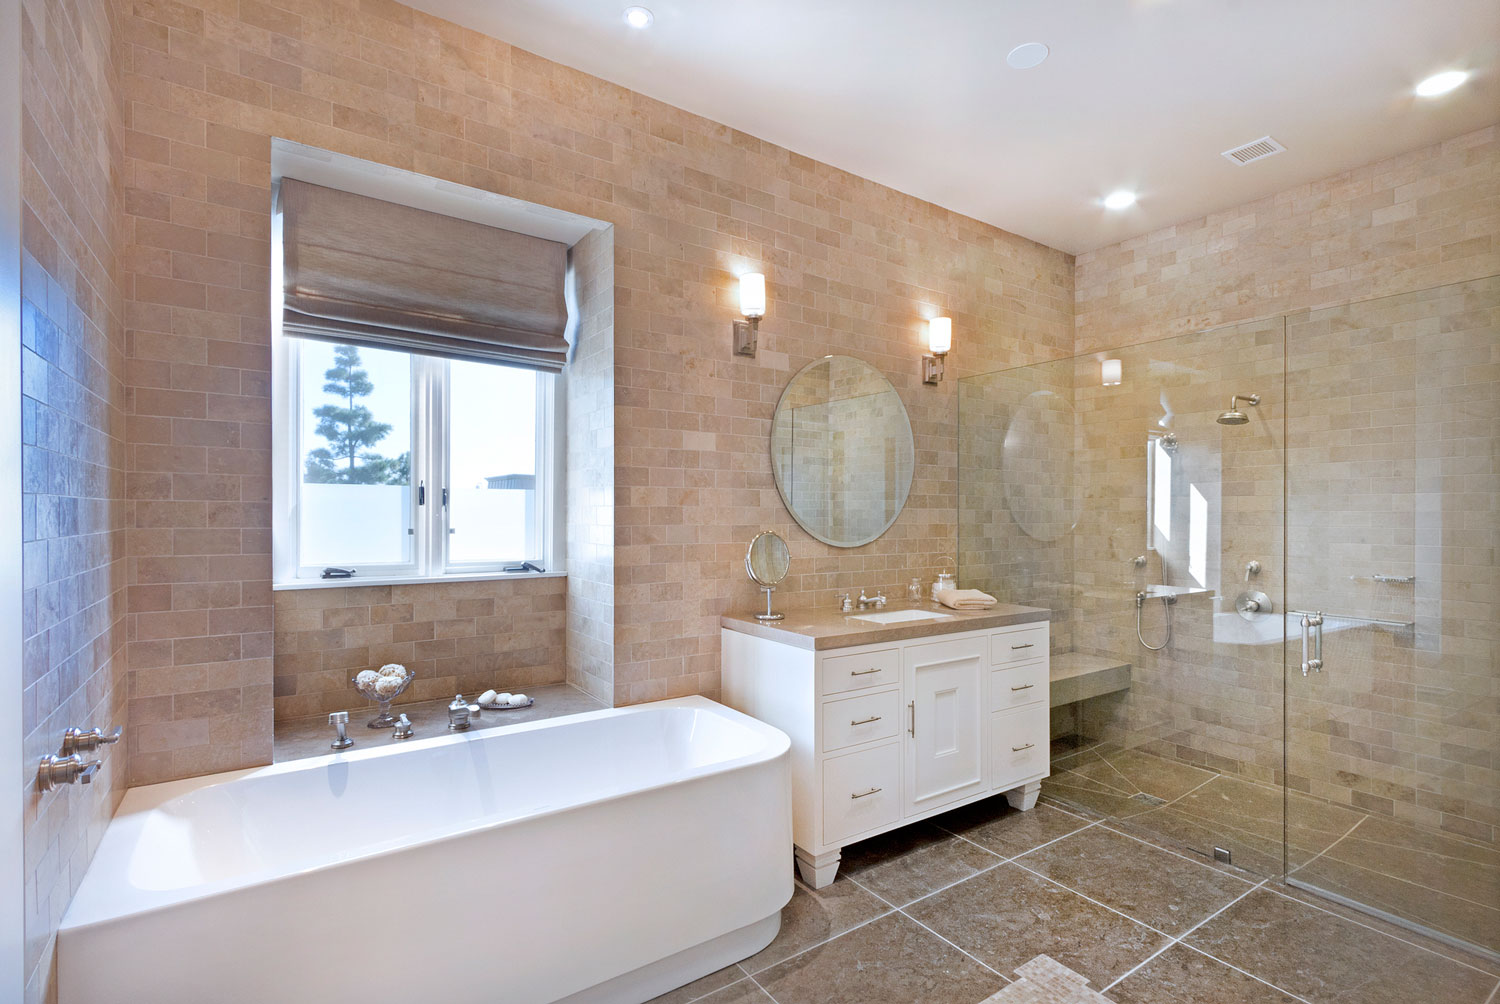 08-transitional-bathroom-tub-shower-tile-walls-gary-drake-general-contractor.jpg